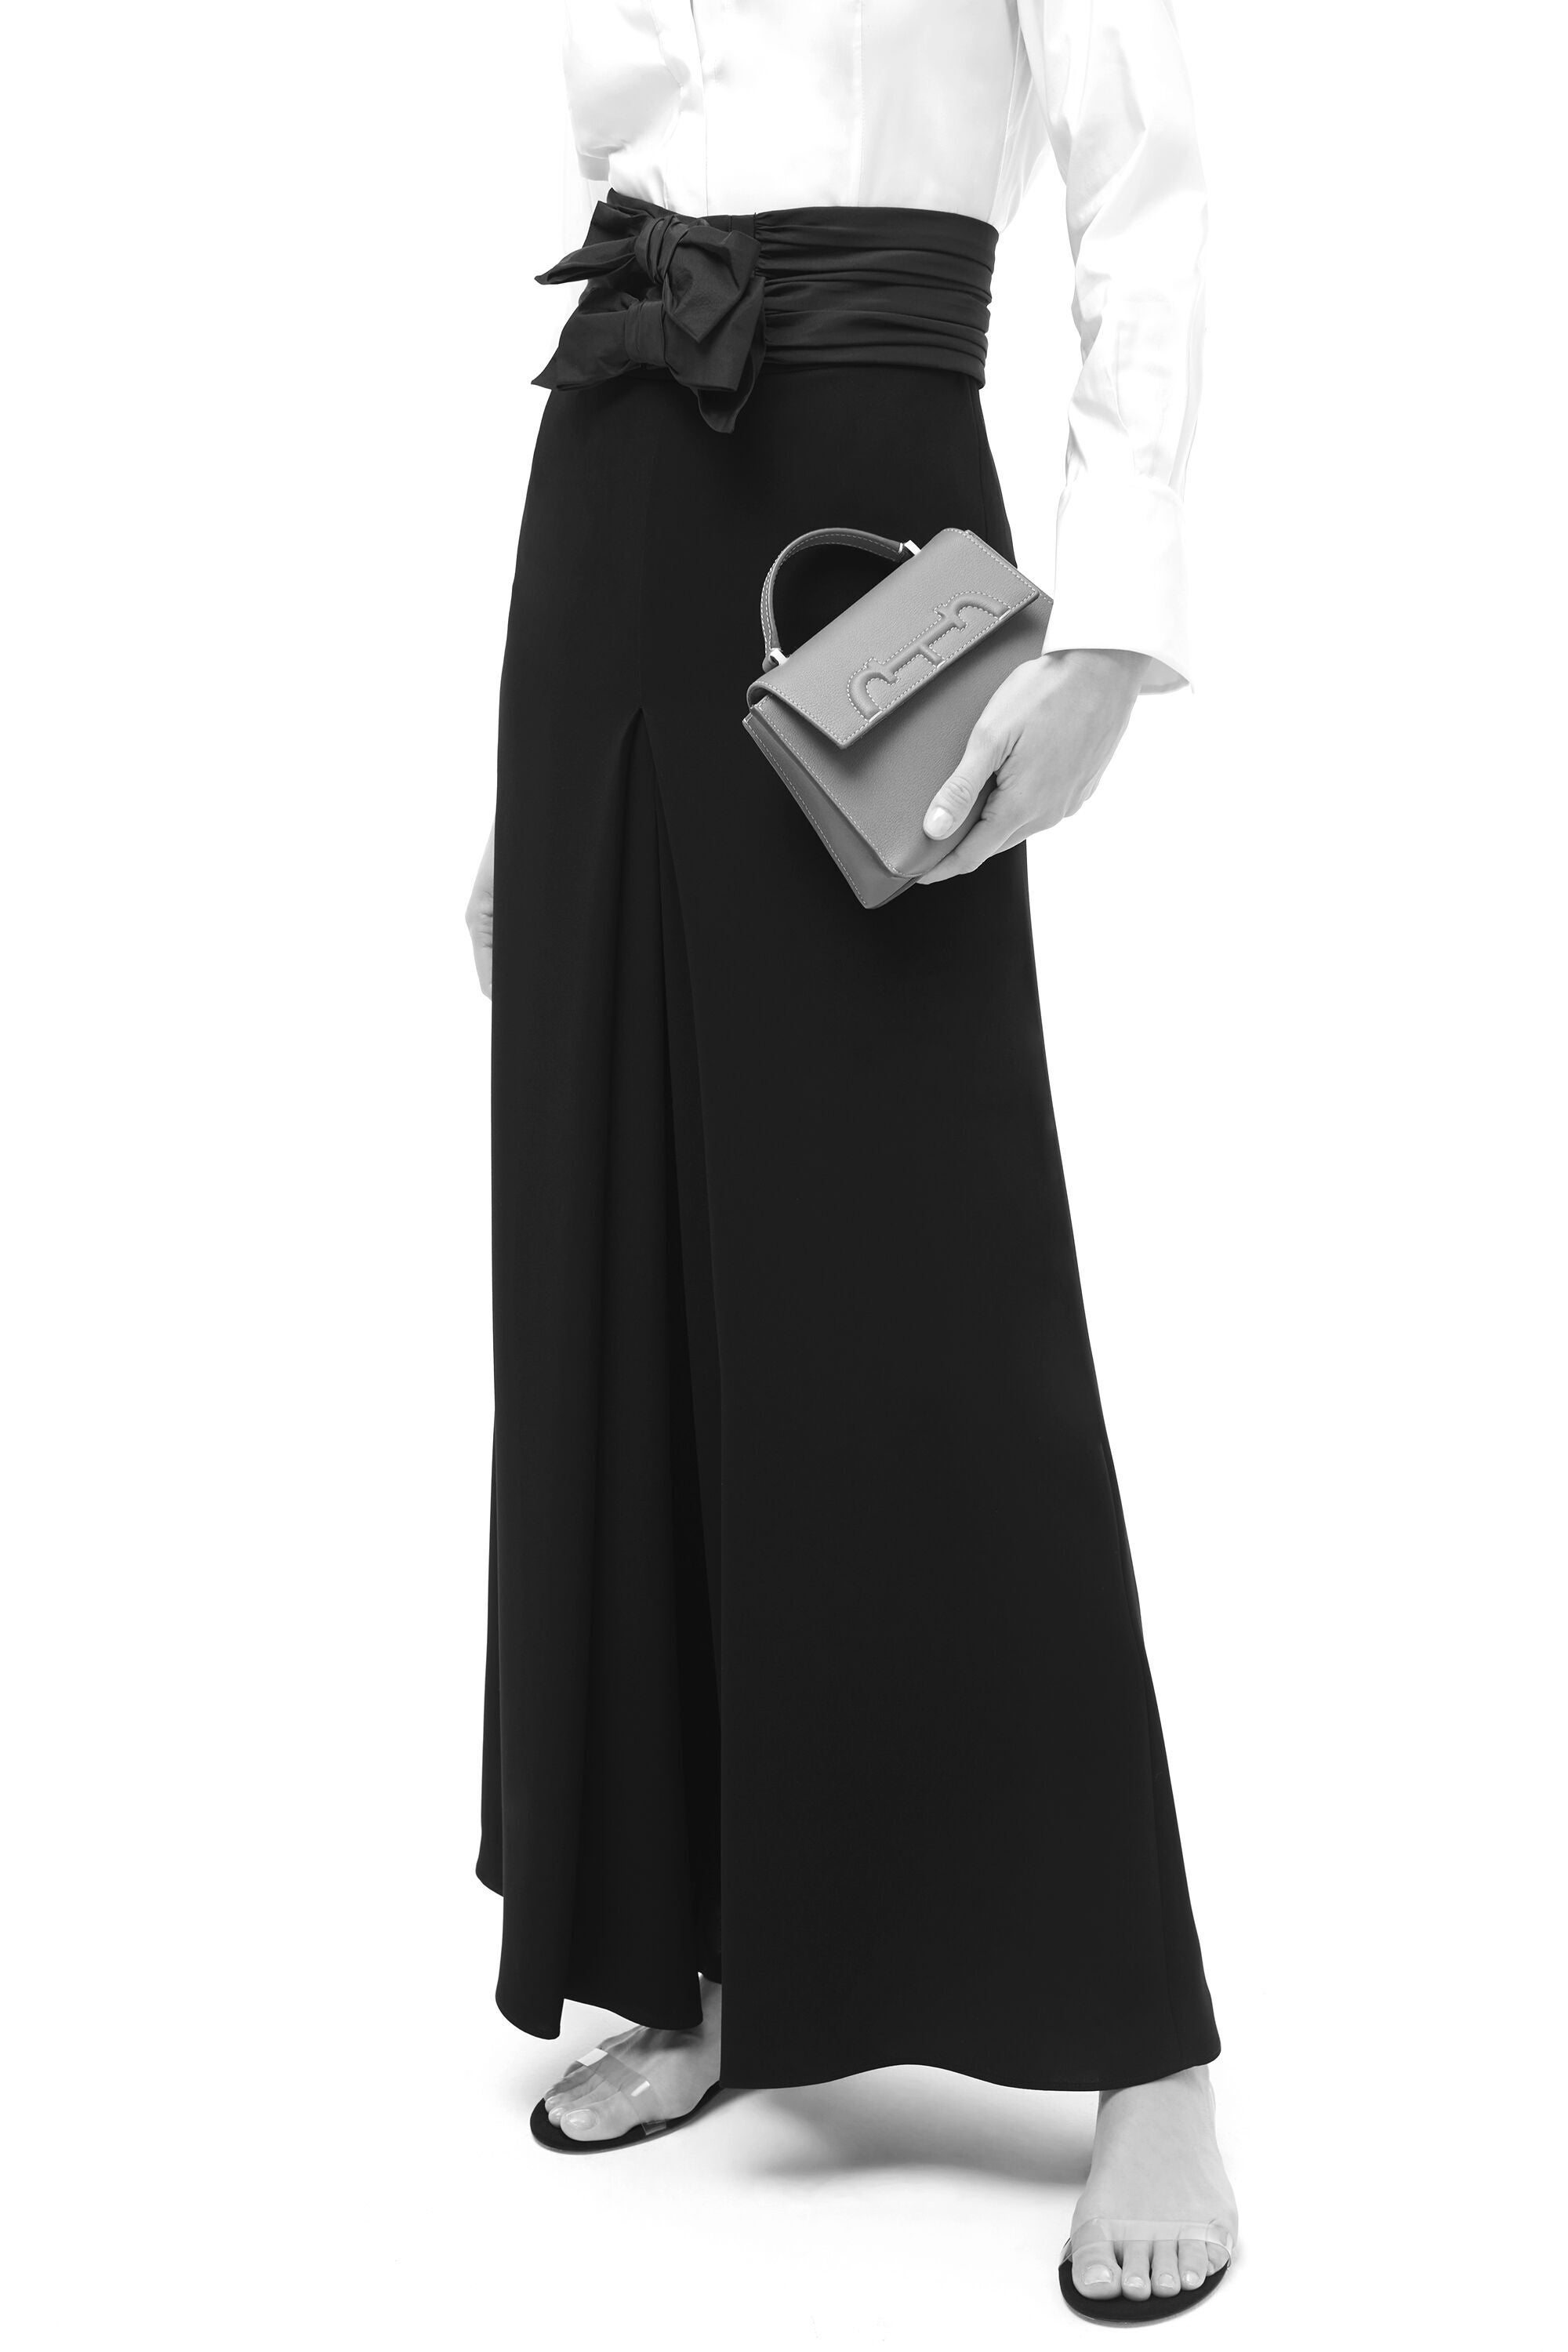 Carolina Herrera Mini Initials Insignia White Bag – thankunext.us